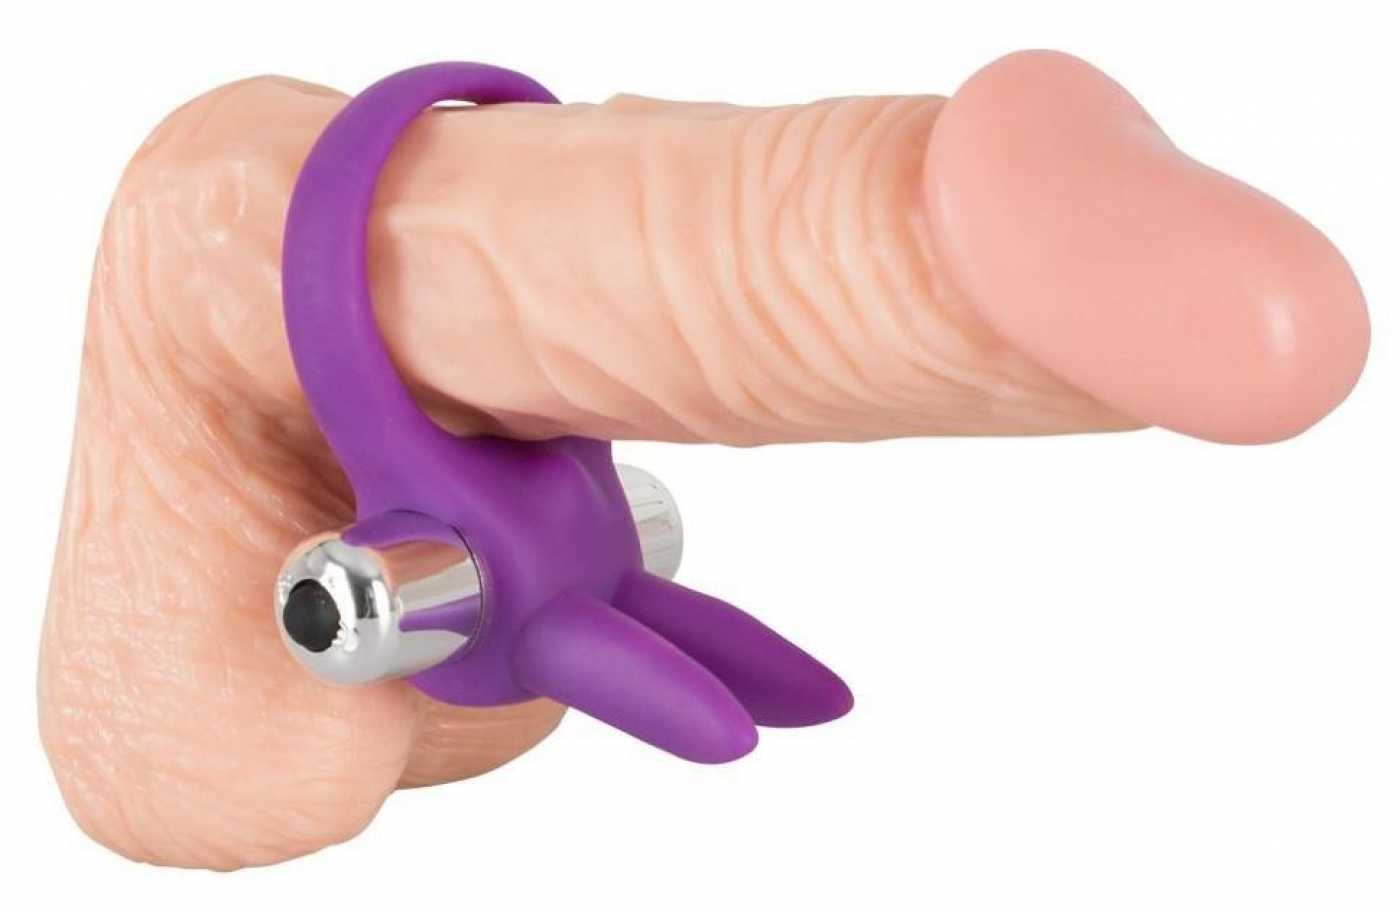 Кольцо эрекционное RABBIT с вибрац фиолетов